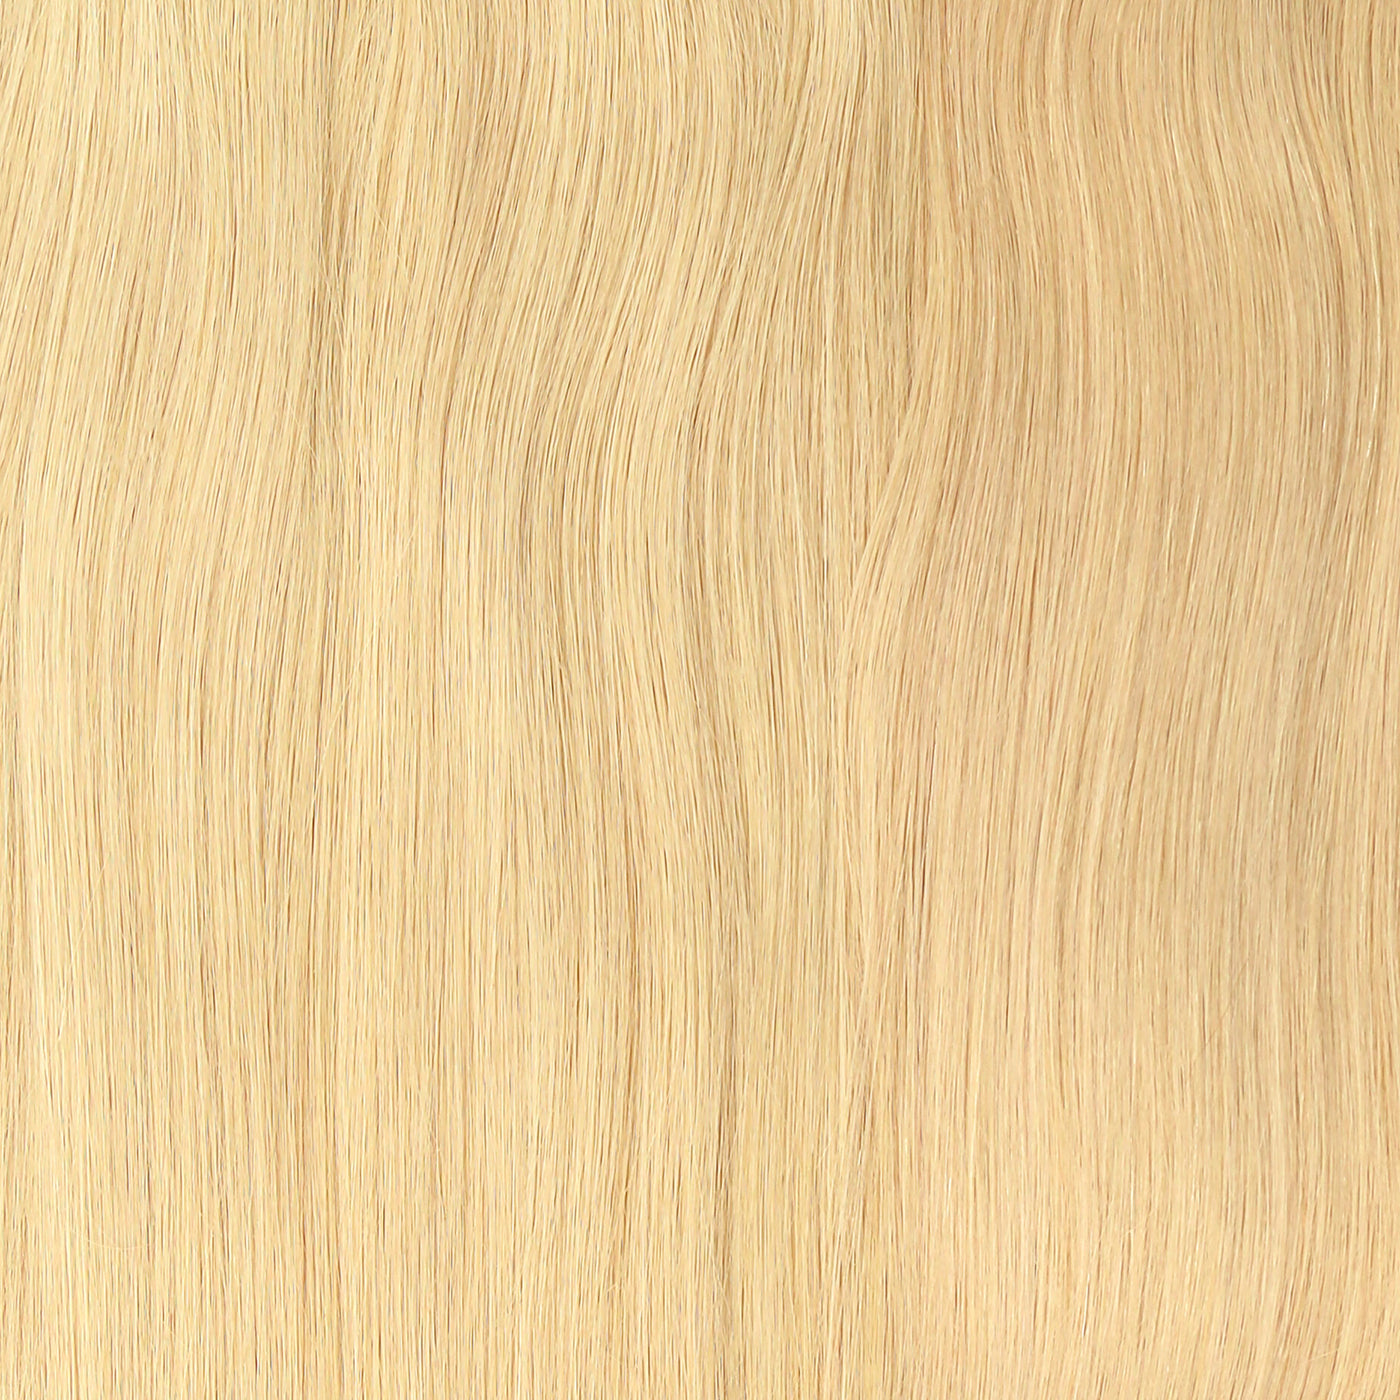 #16 Blonde AquaLyna Aura Hair Extension